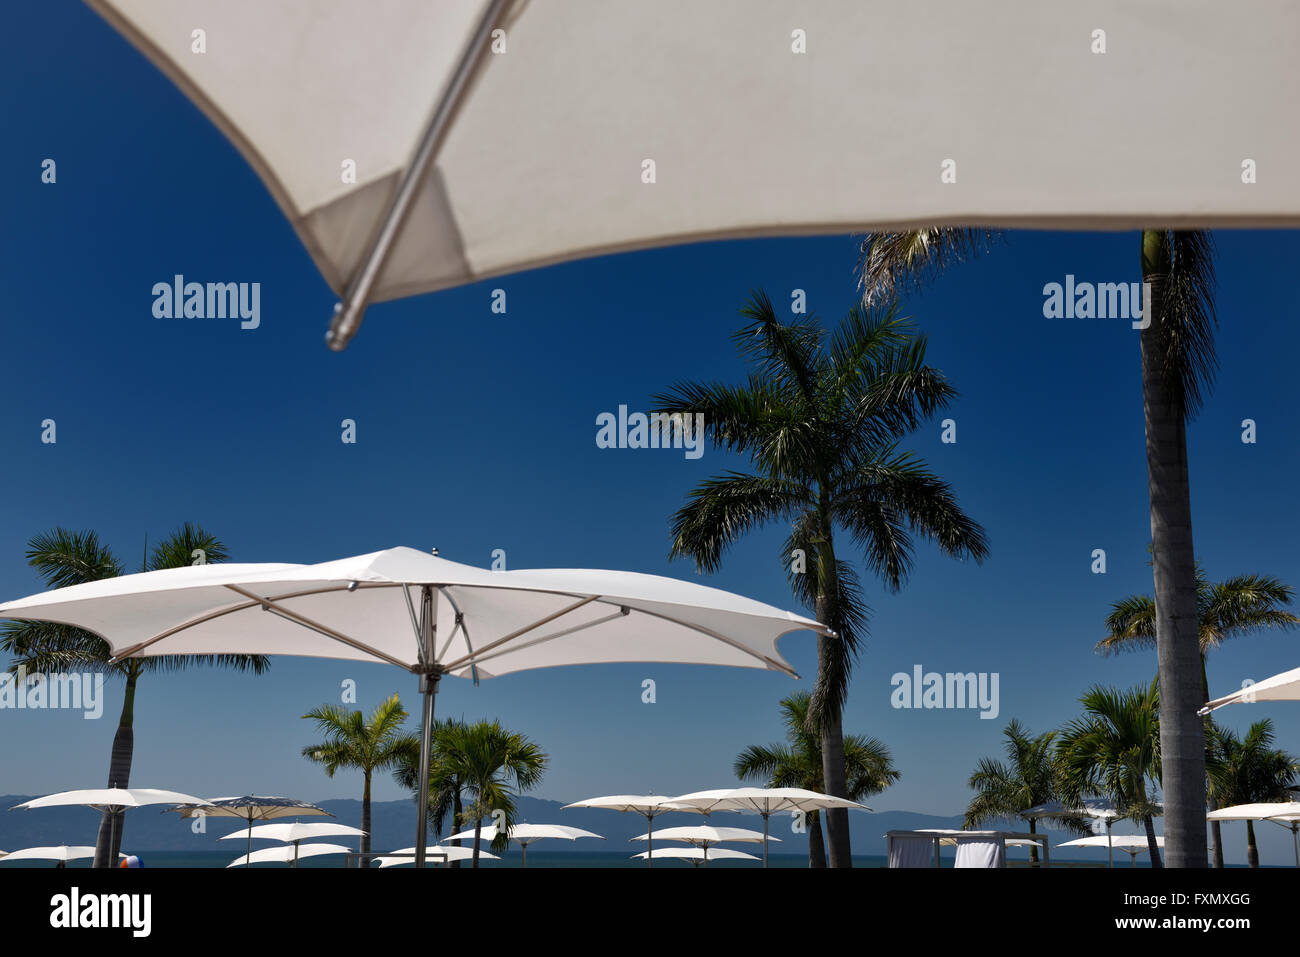 Resort pool umbrellas Nuevo Vallarta Mexico with Sierra Madre mountains and palm trees Stock Photo